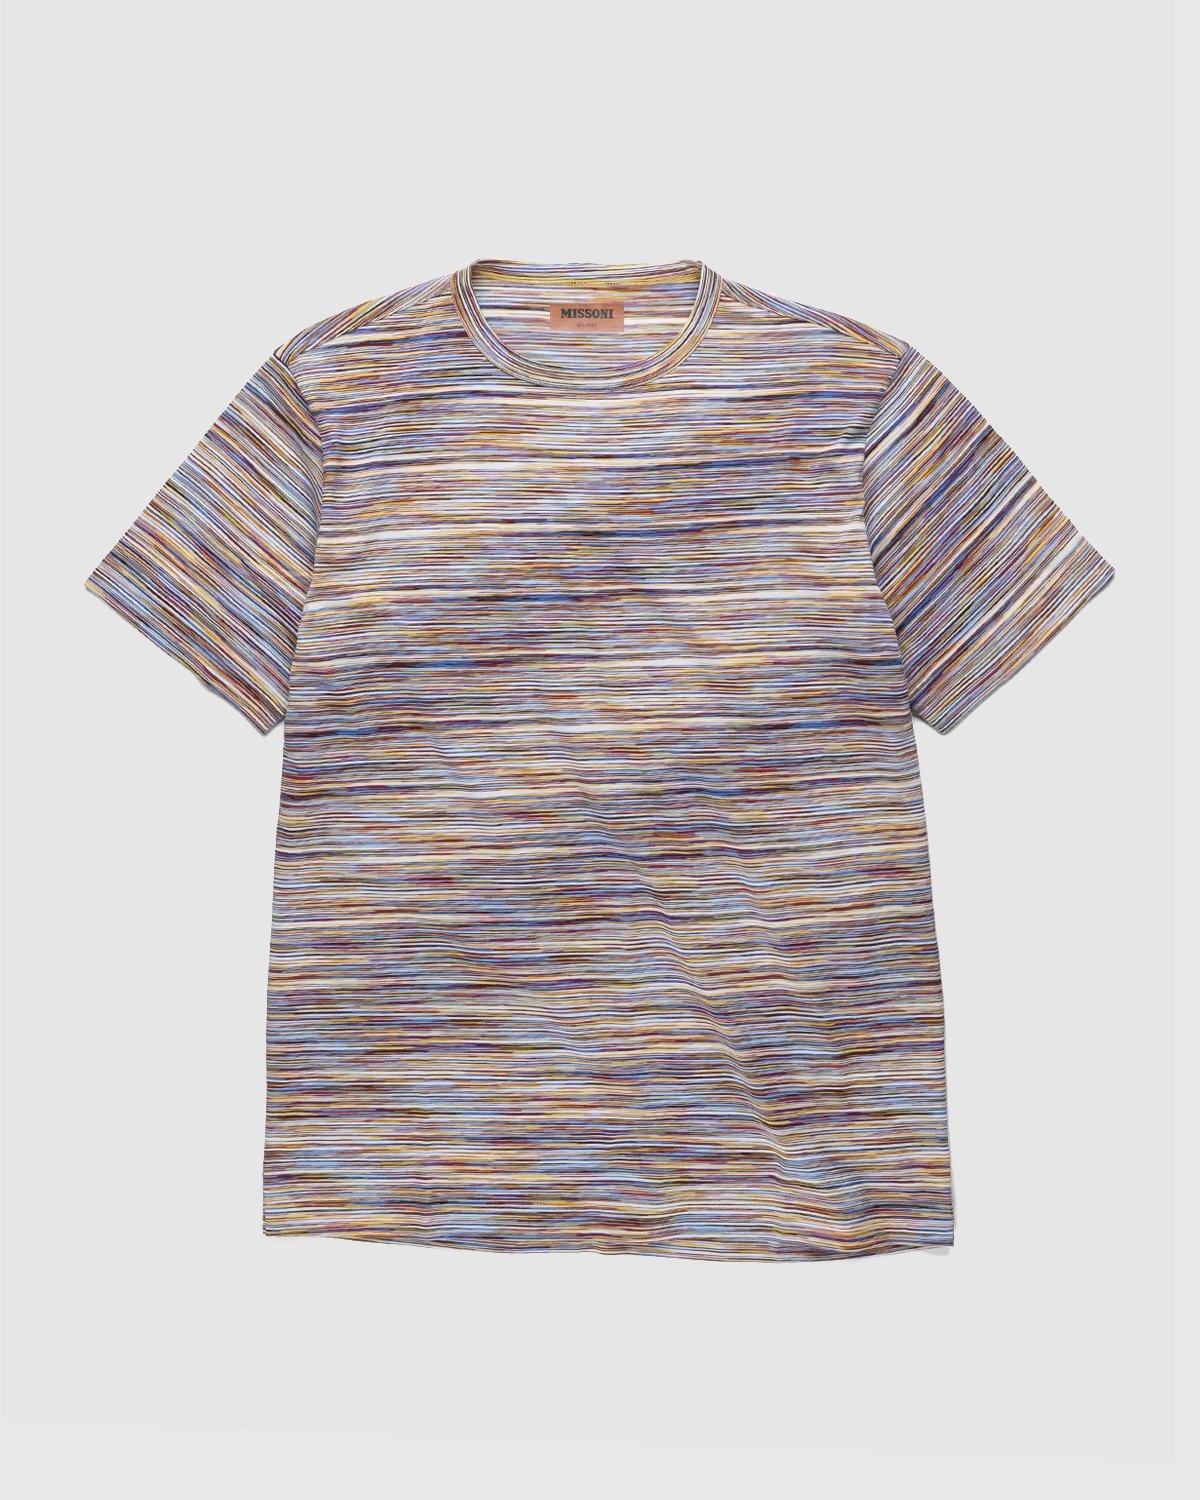 Missoni – Pattern Short-Sleeve T-Shirt Flammato - T-shirts - Multi - Image 1